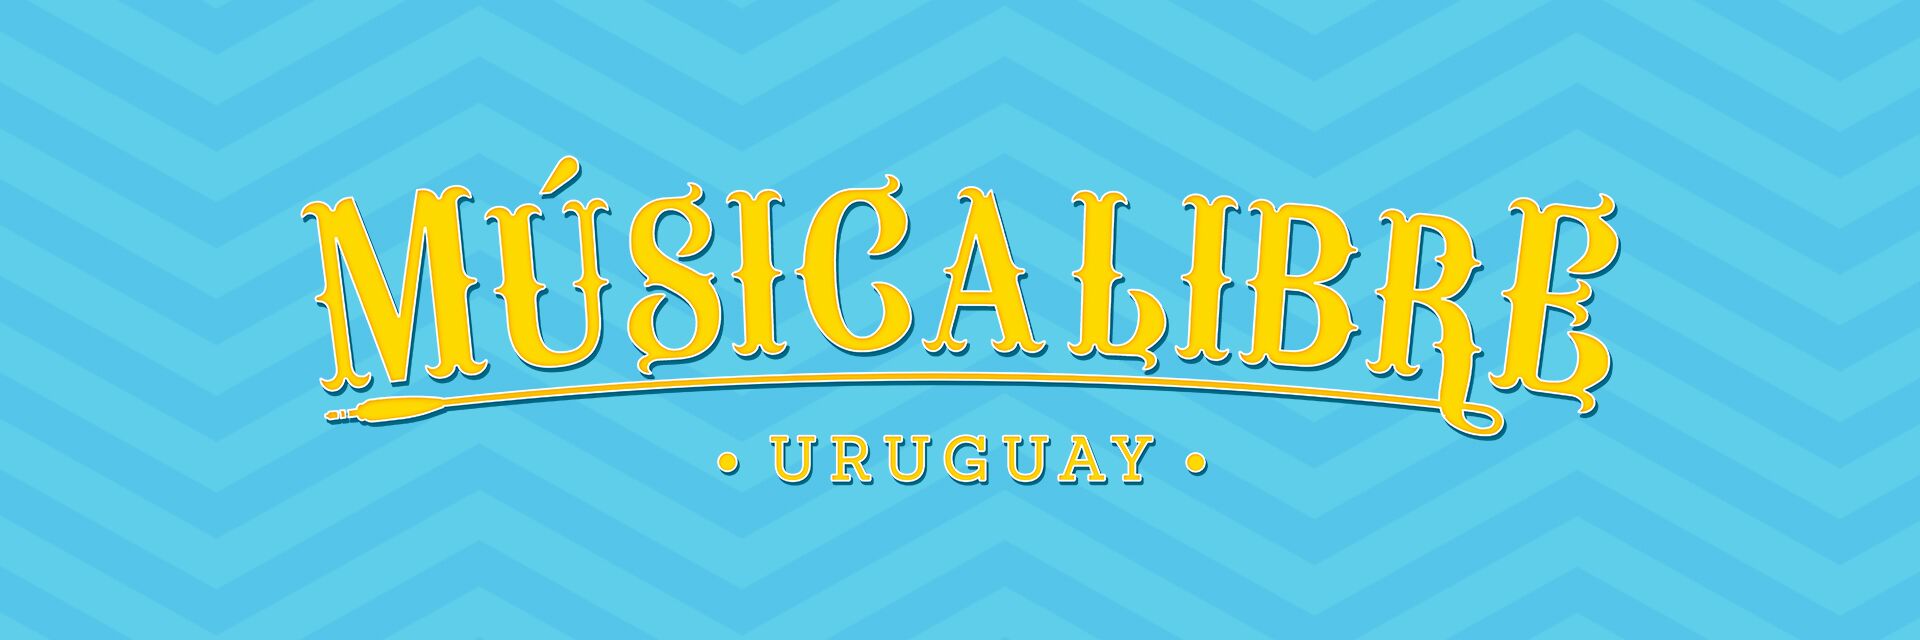 musica-libre-uruguay-portada